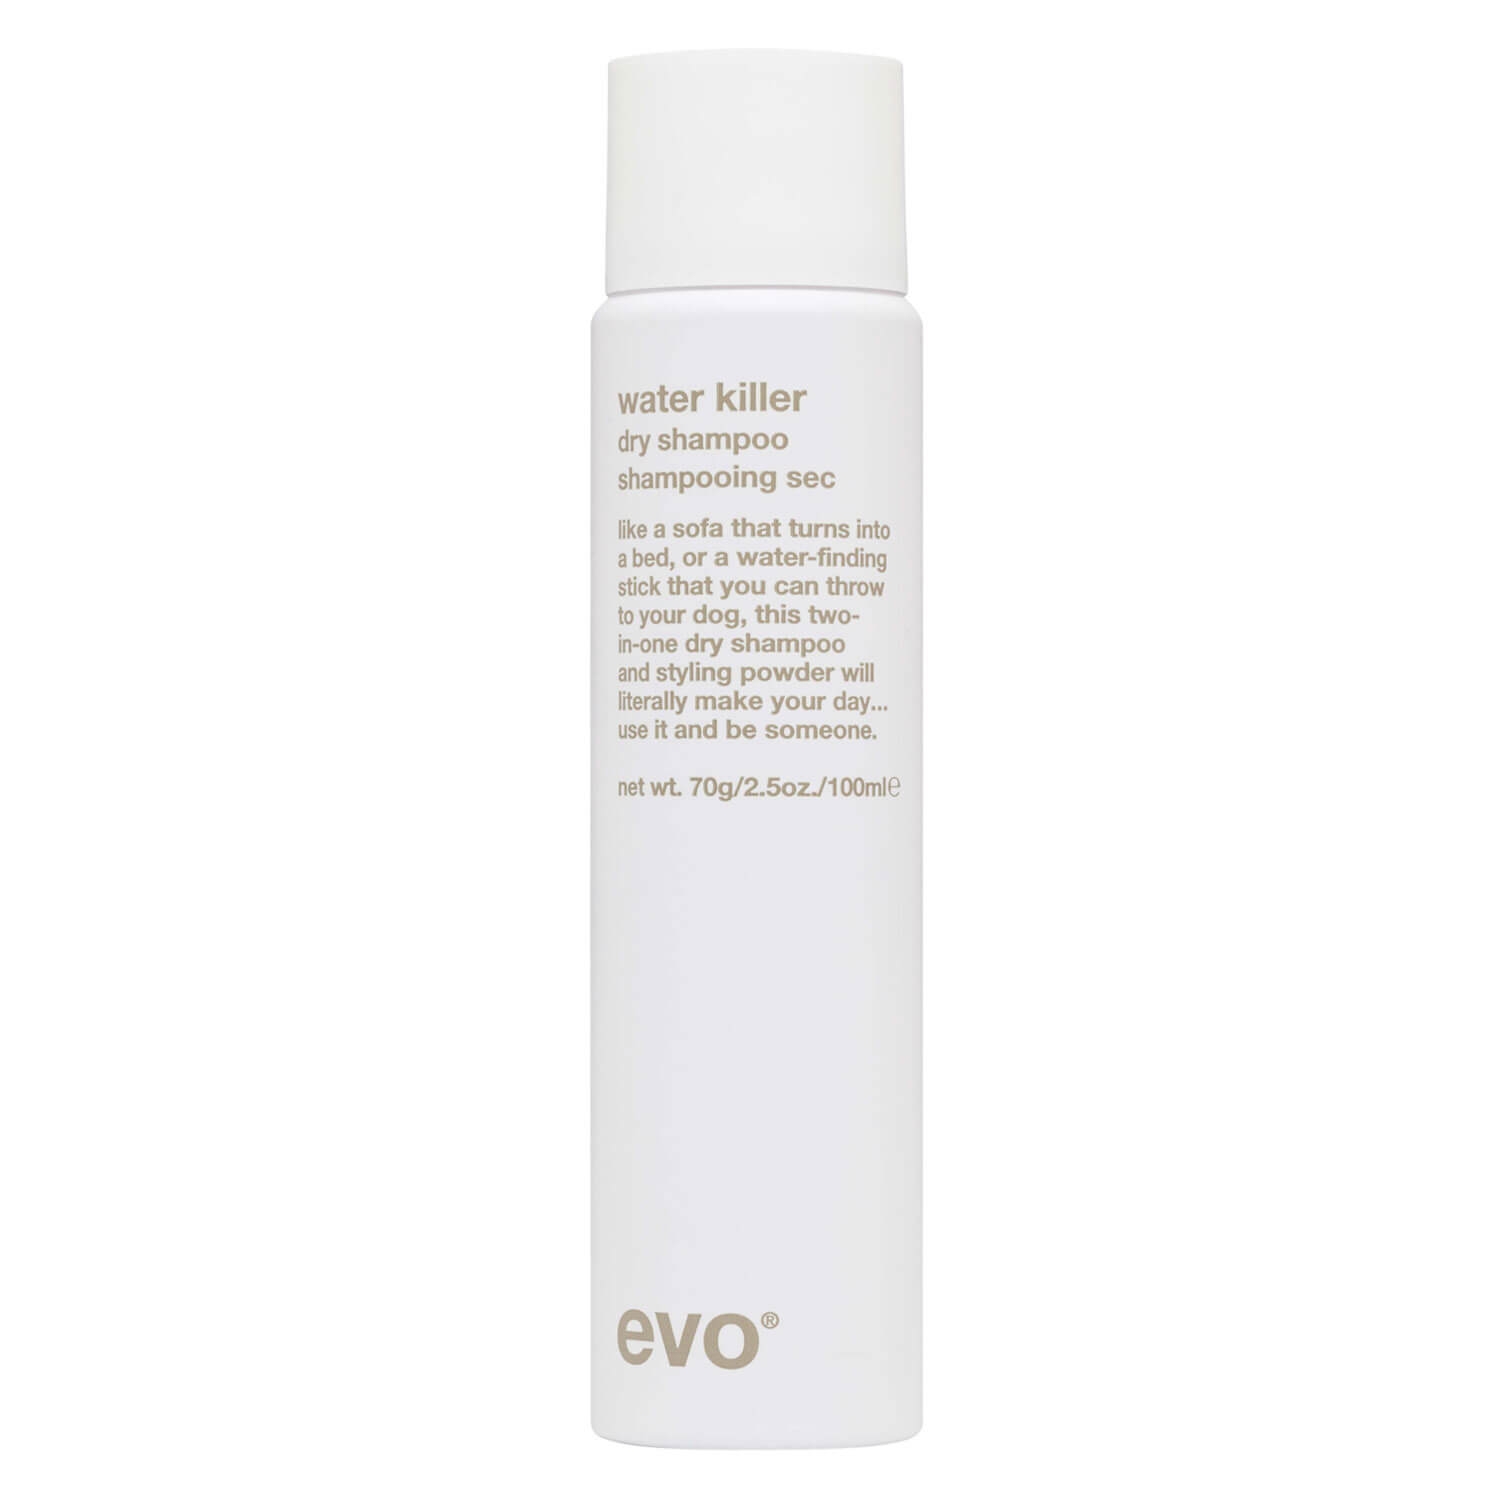 Image du produit de evo style - water killer dry shampoo